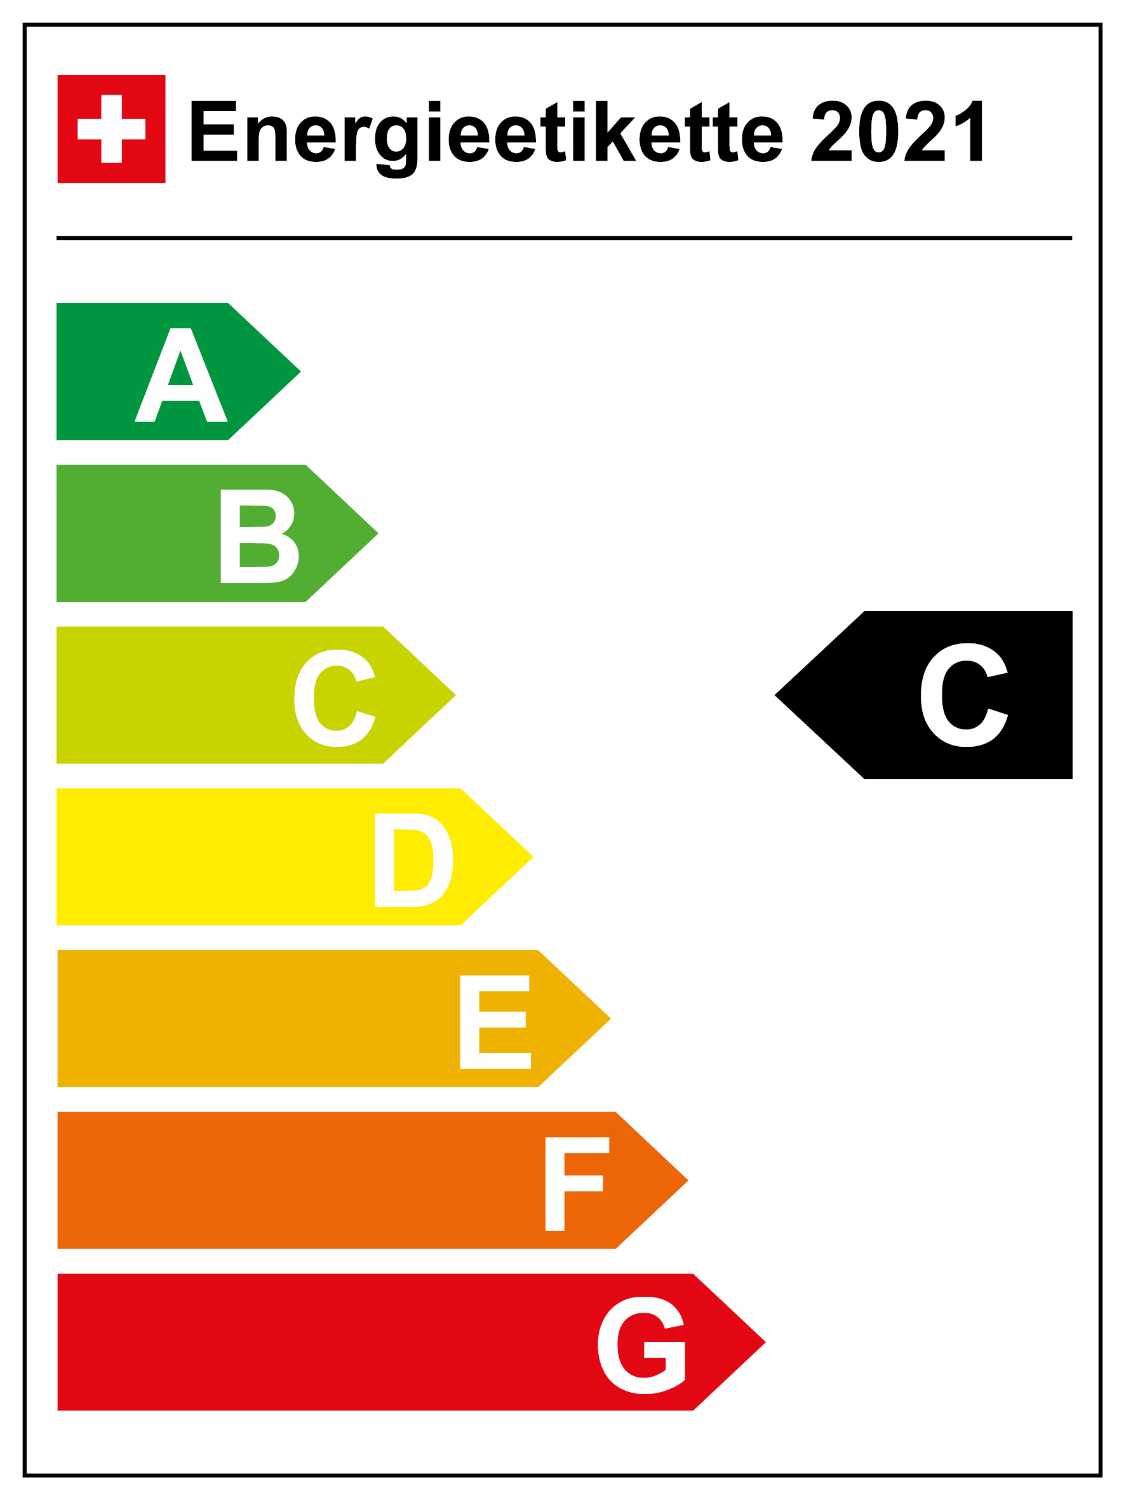 Schweiz - Energieeffizienz-Kategorie C (03/2021)